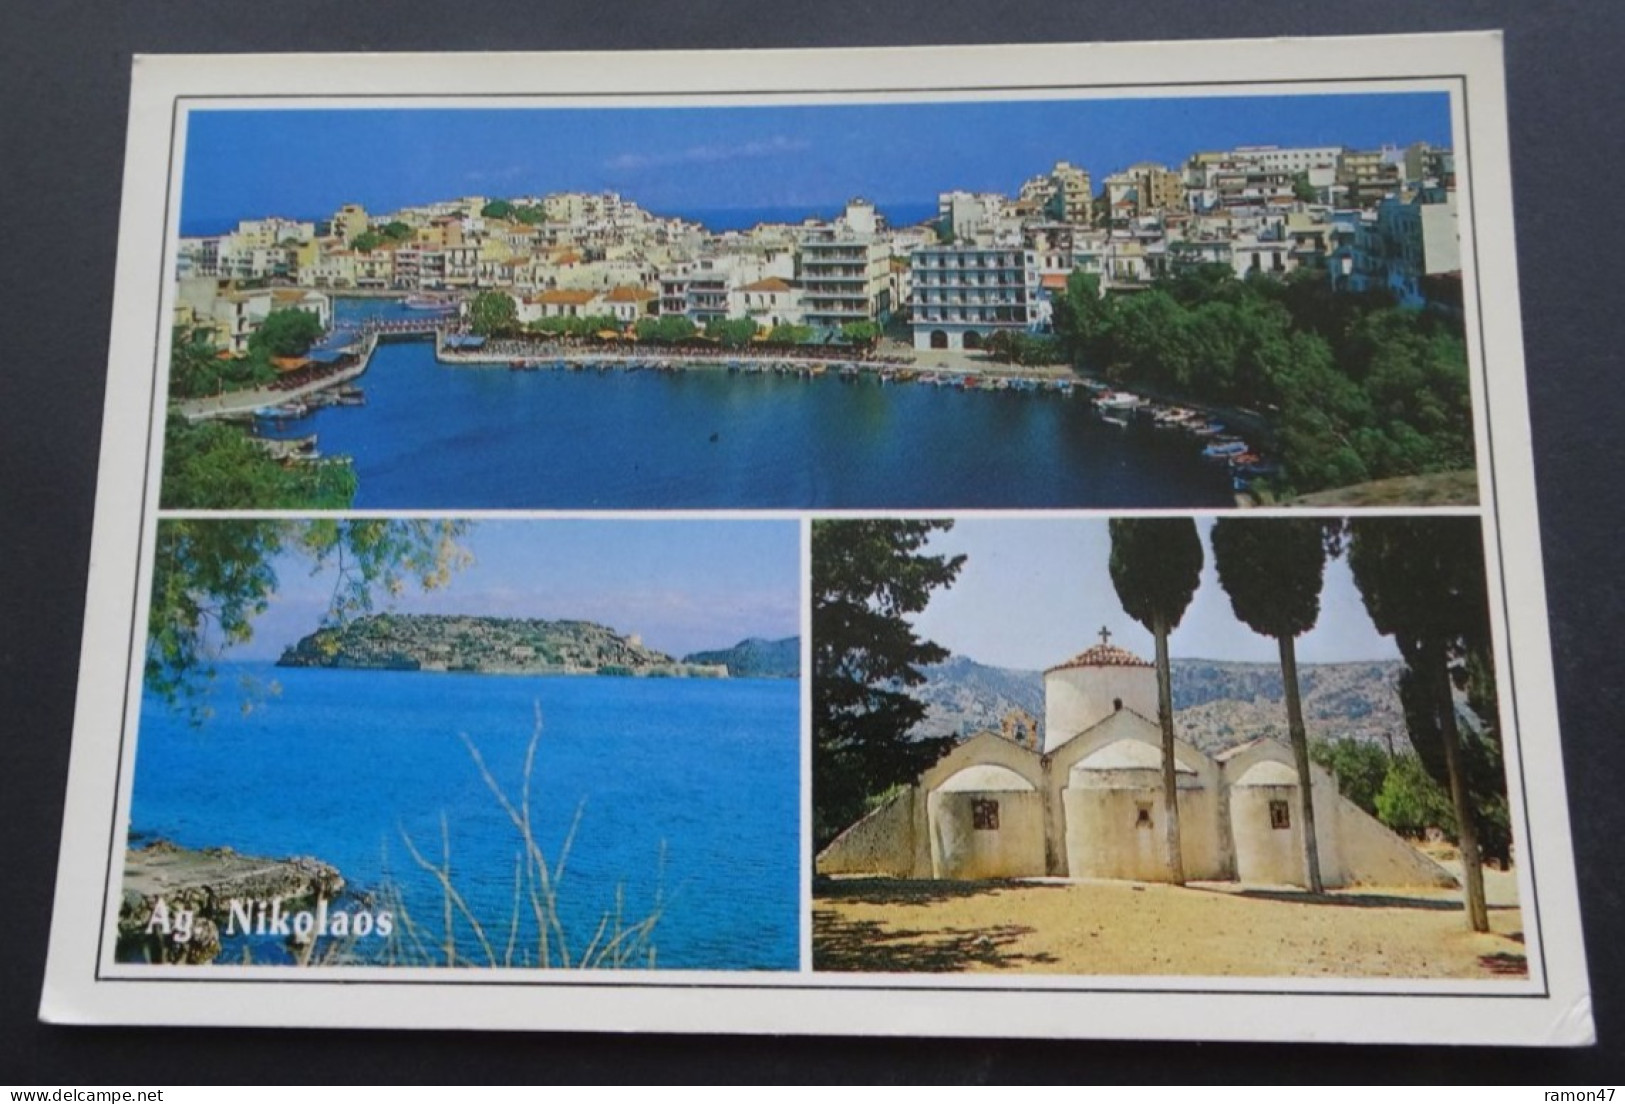 Krete - Agios Nikolaos - Collection Drossos - Drossos Bros, Itaklion, Crete - # 107 - Griechenland